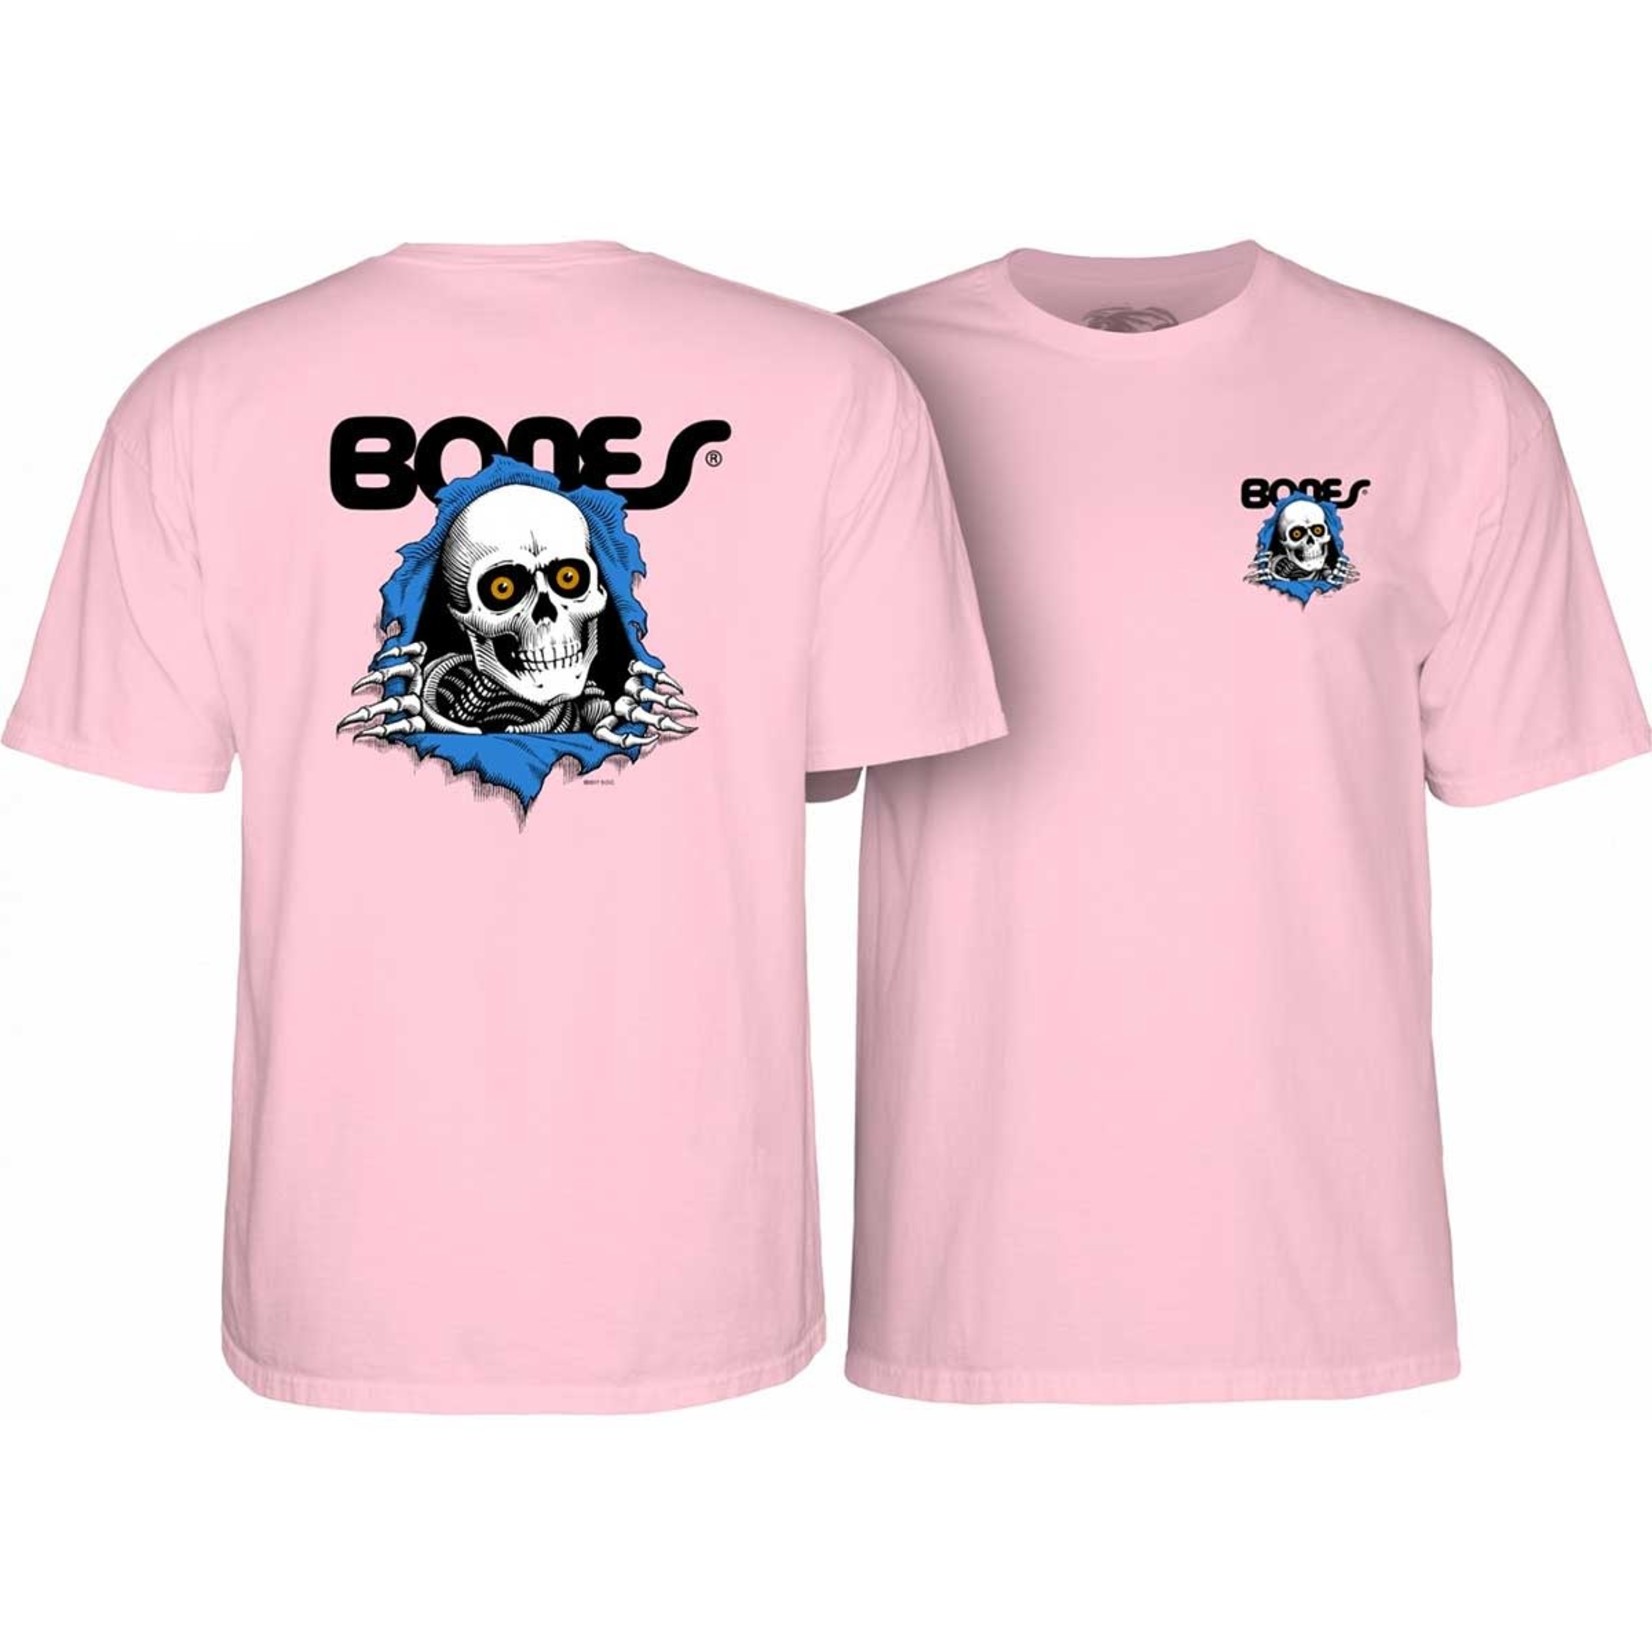 Powell Peralta Powell Peralta Ripper T-Shirt - Light Pink -